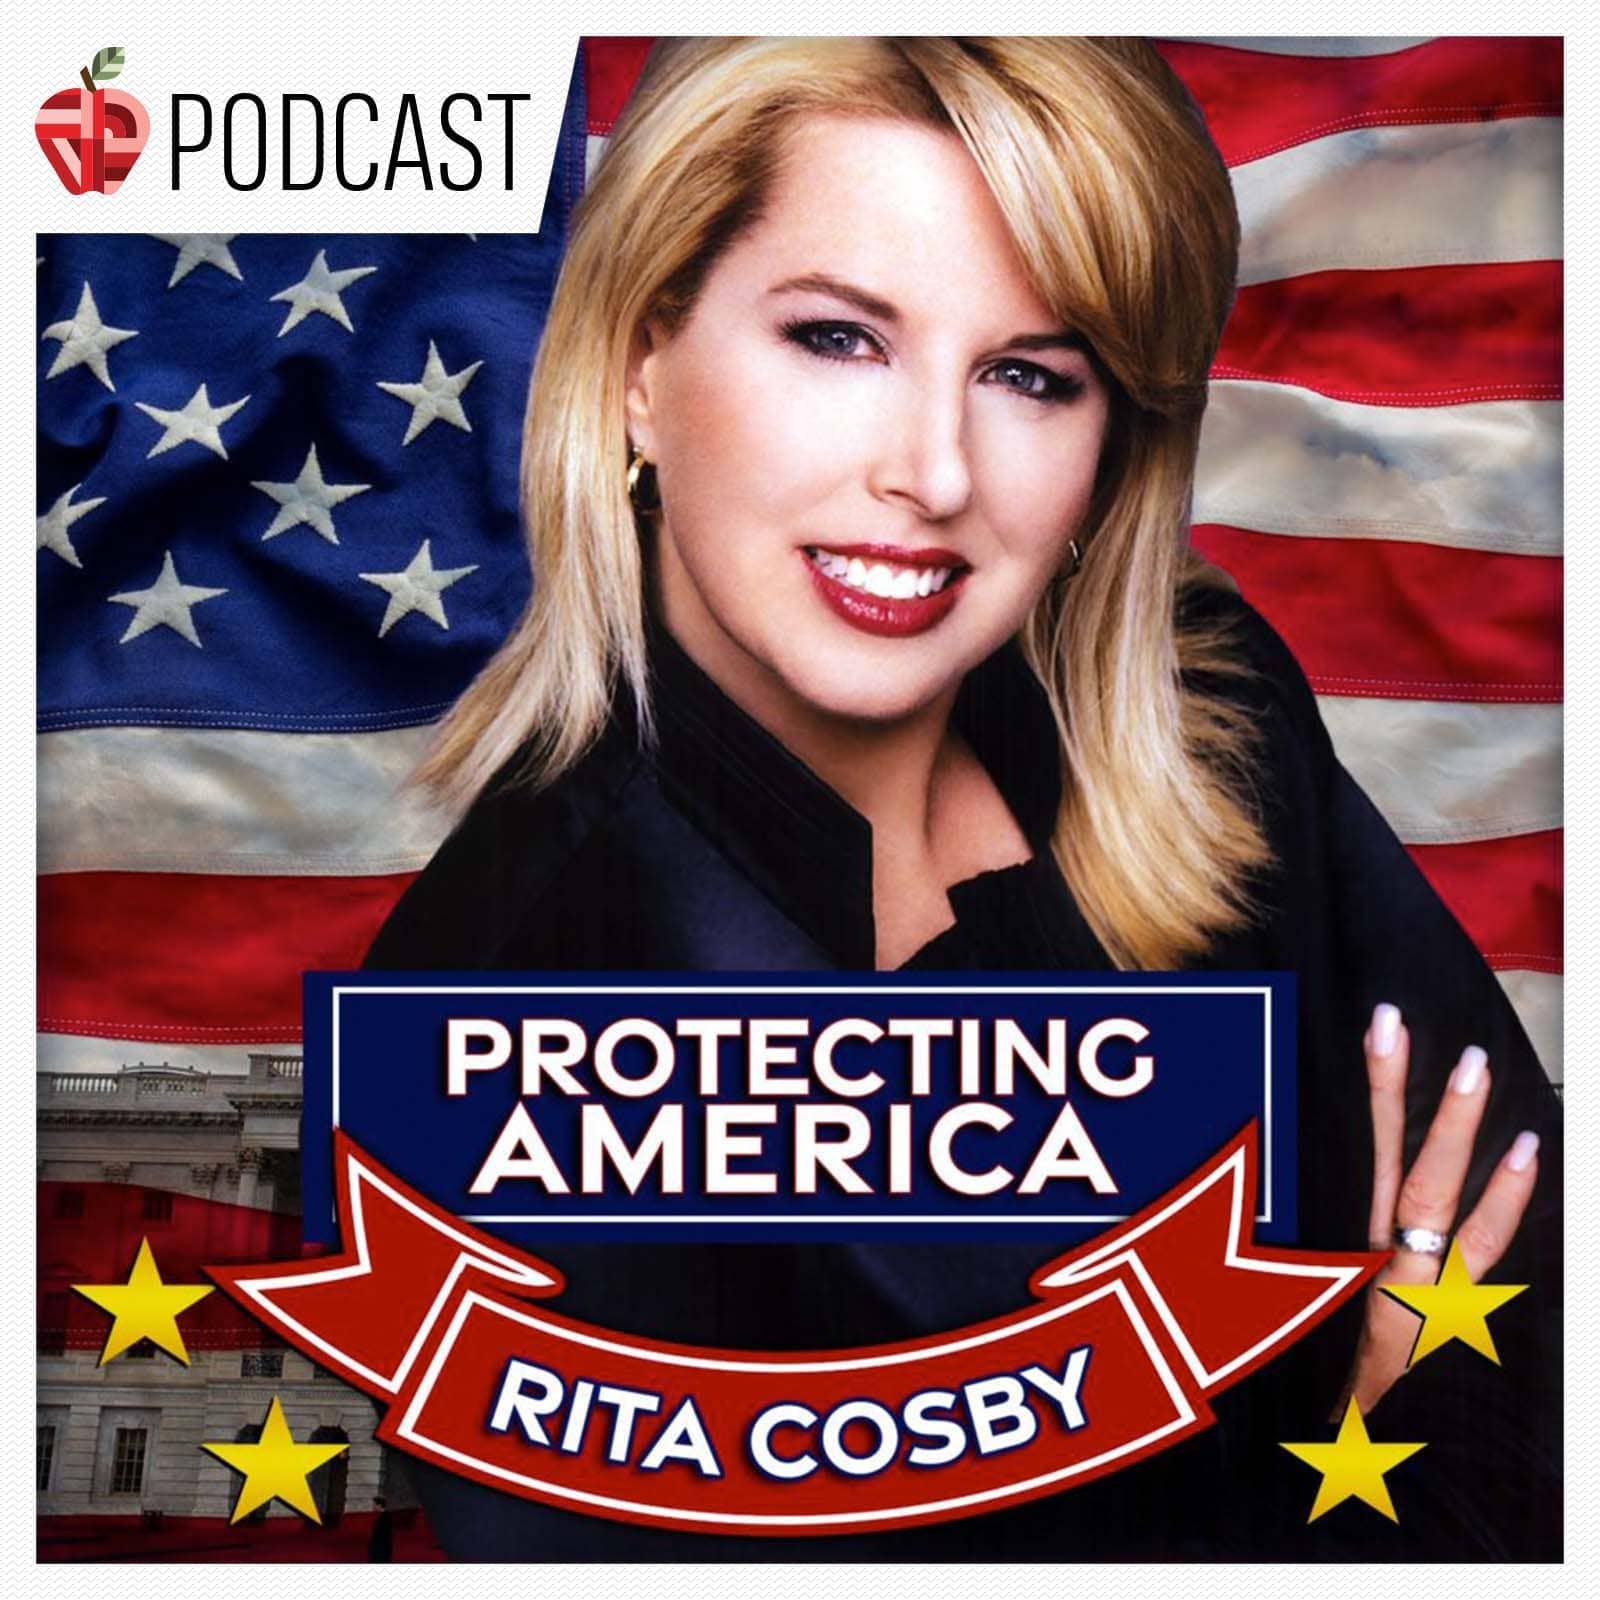 rita-cosby-protecting-america-correct-podcast-new-logo-26